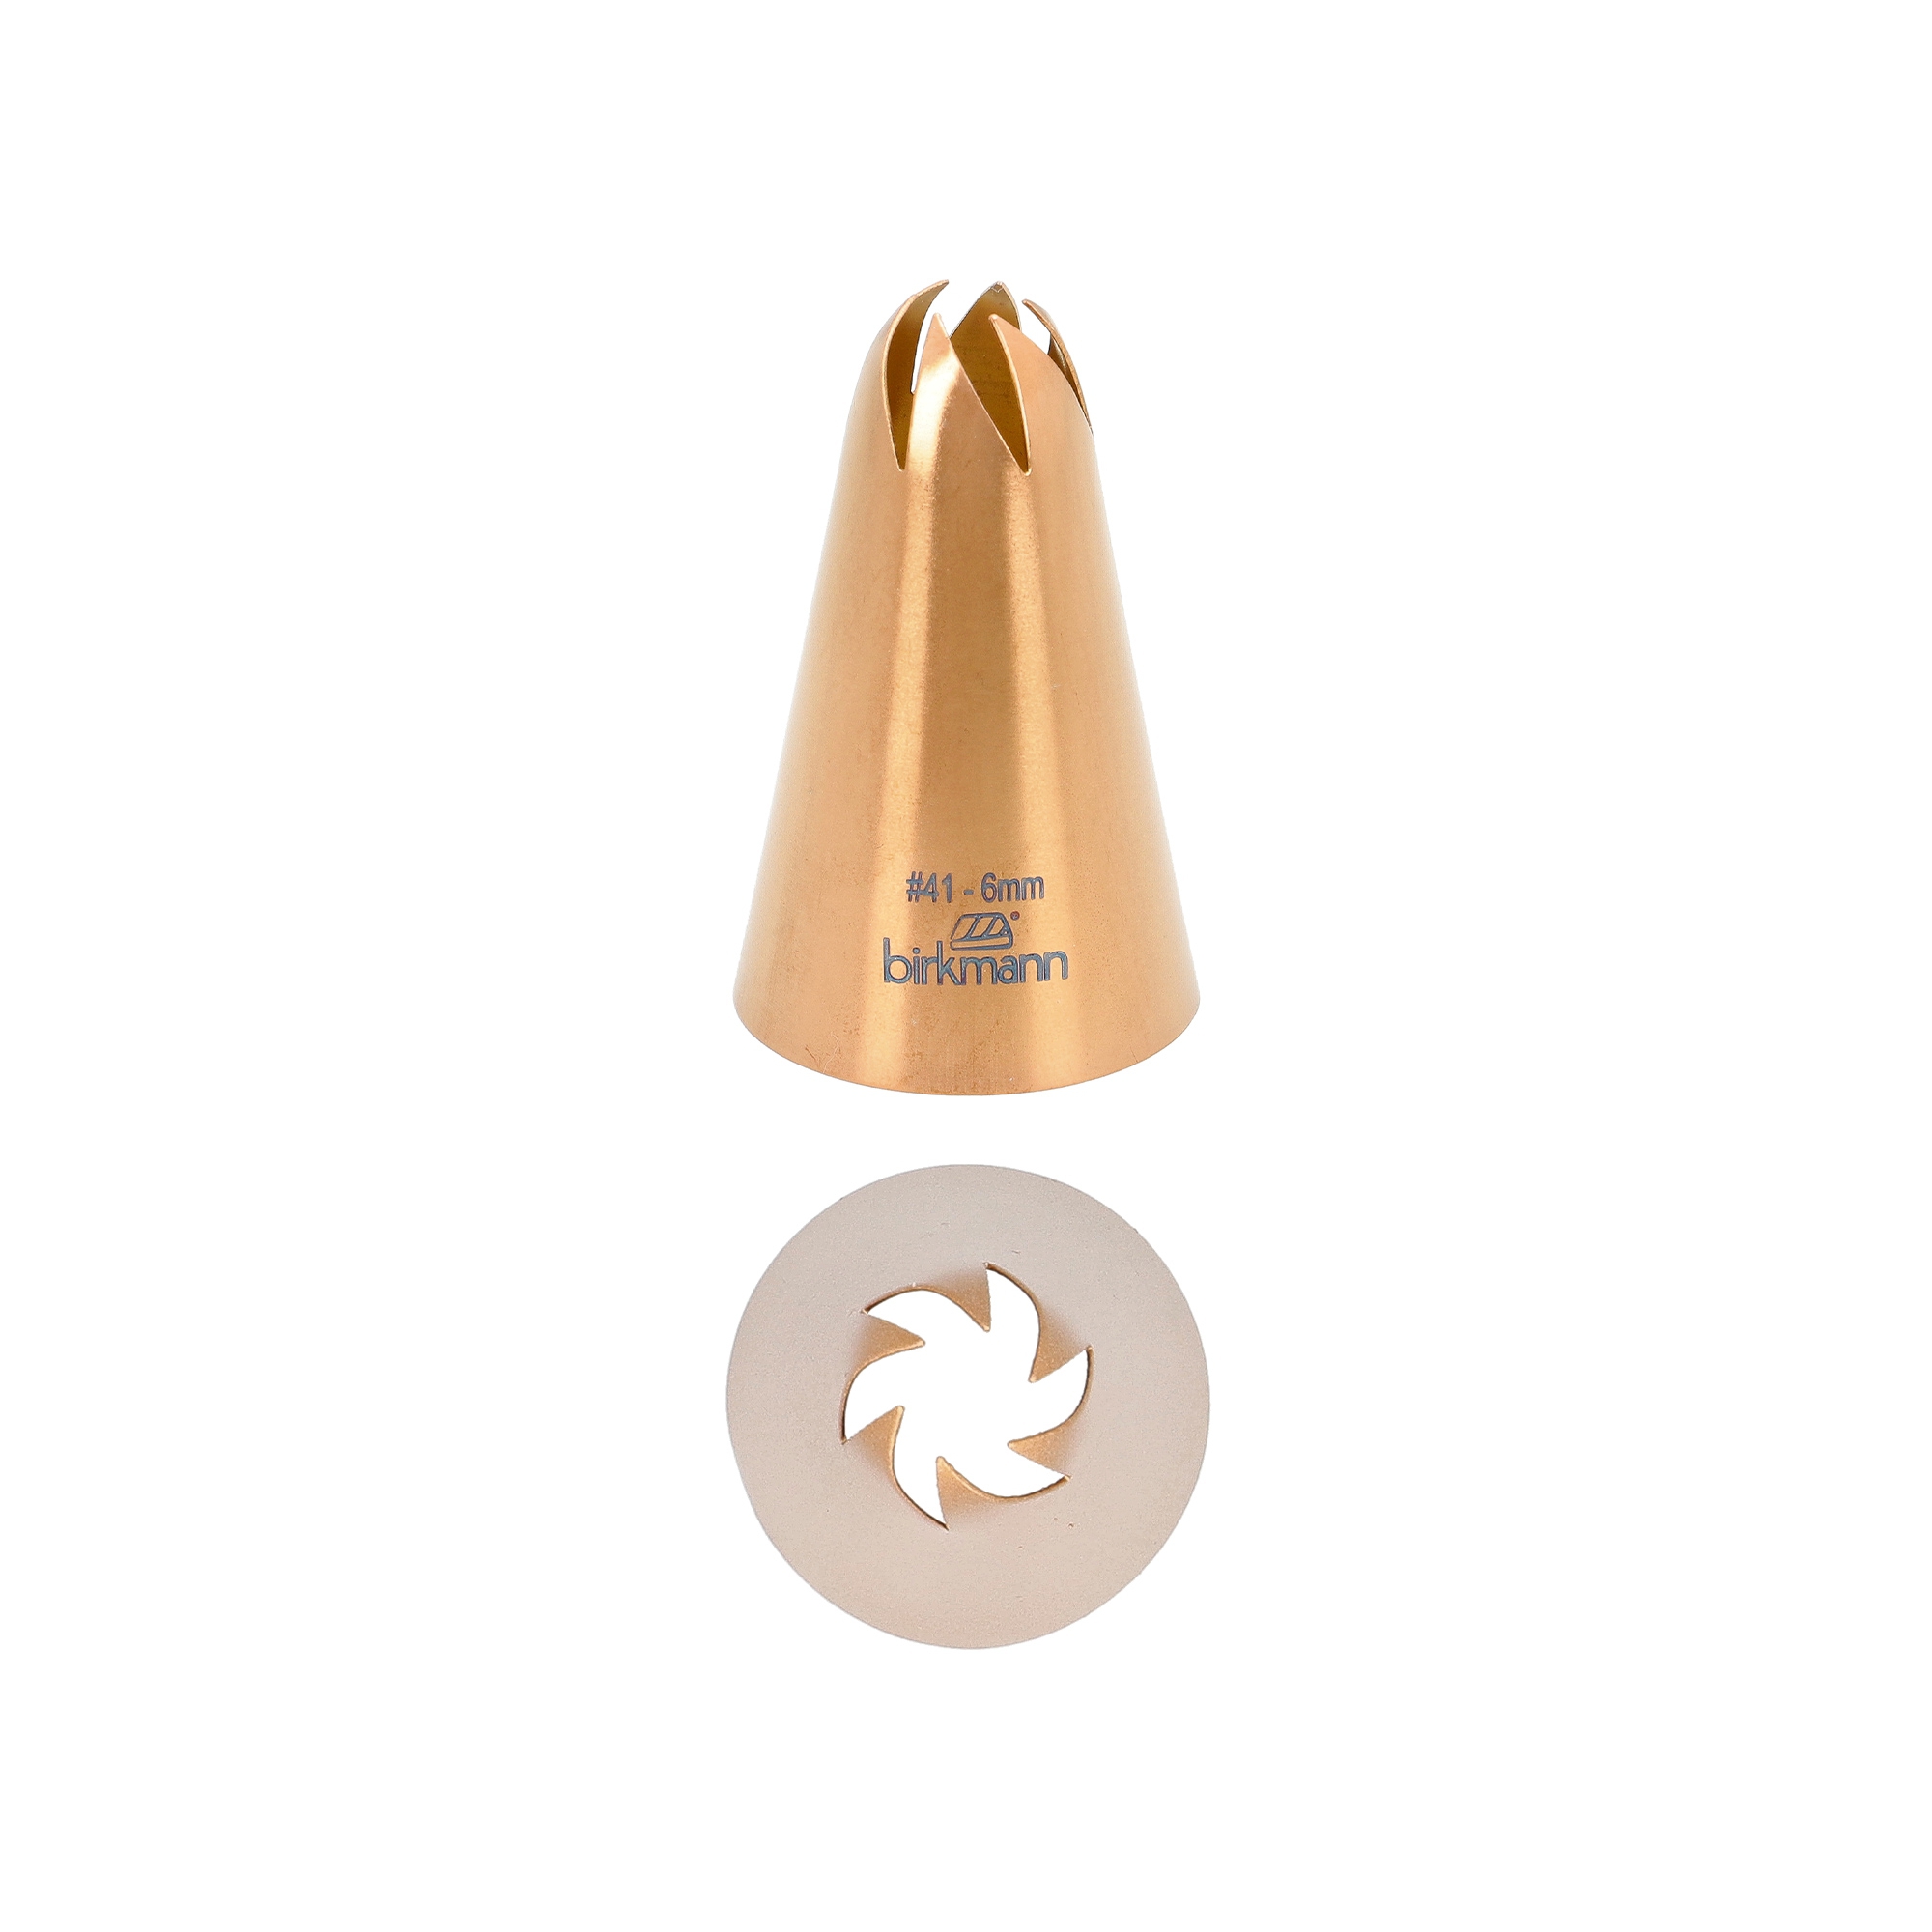 Birkmann - Rose nozzle copper colored #41 - 6mm